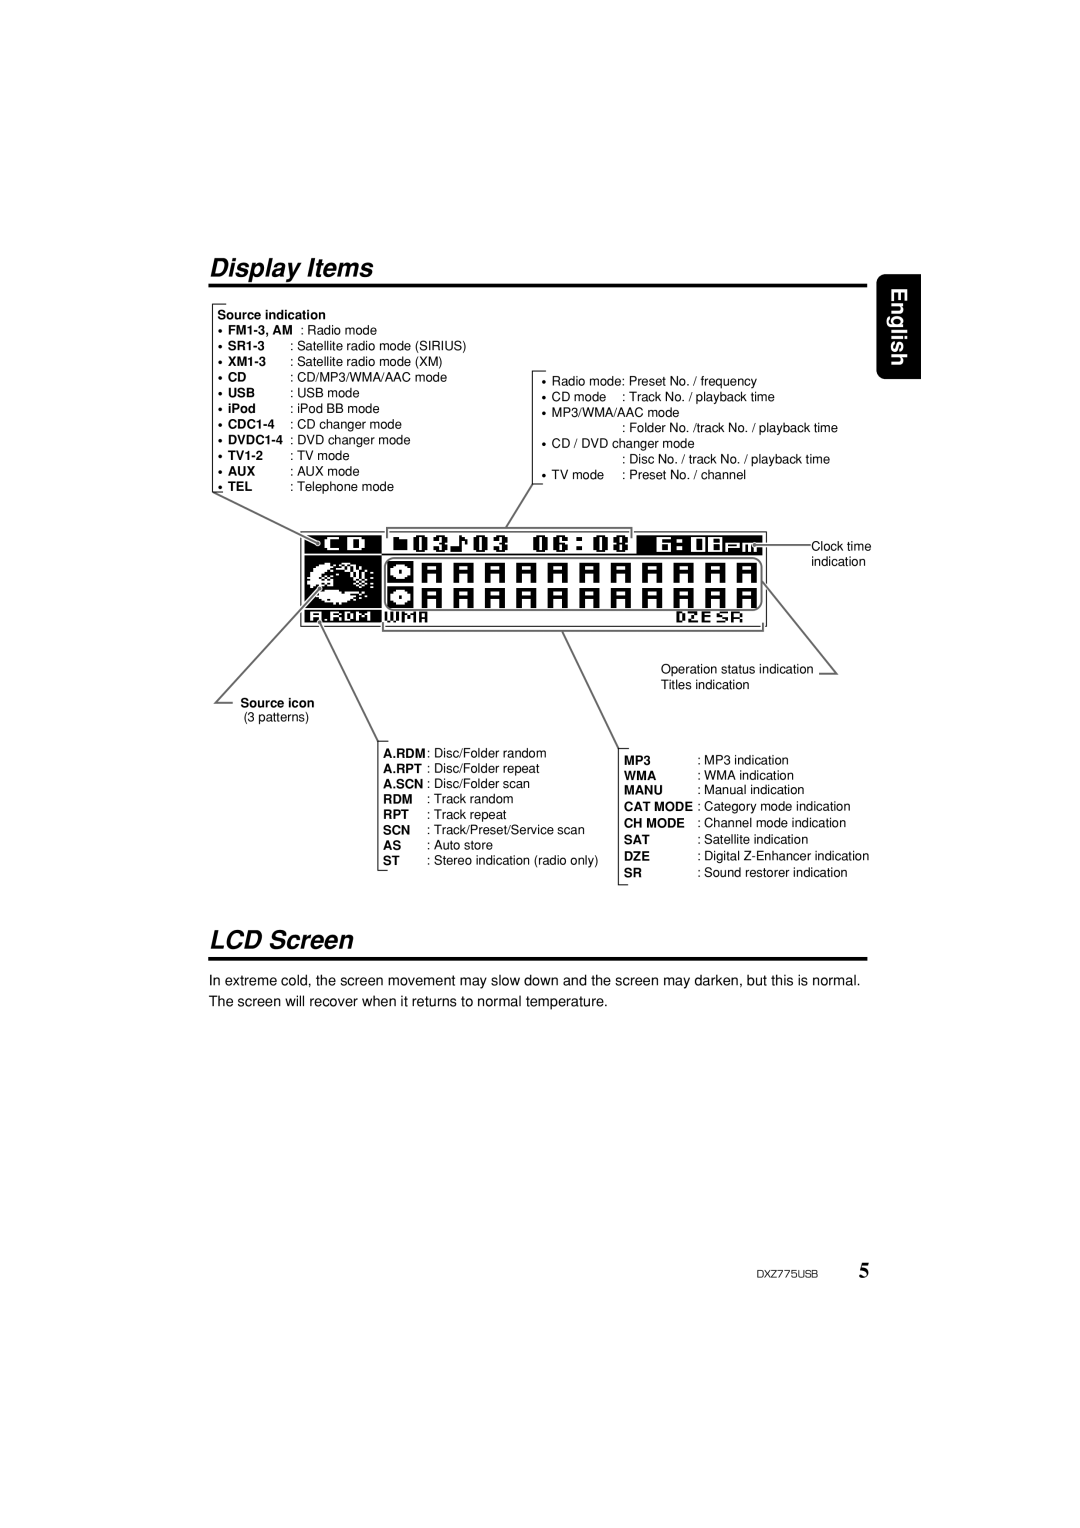 Clarion iDXZ775USB owner manual Display Items, LCD Screen, English 